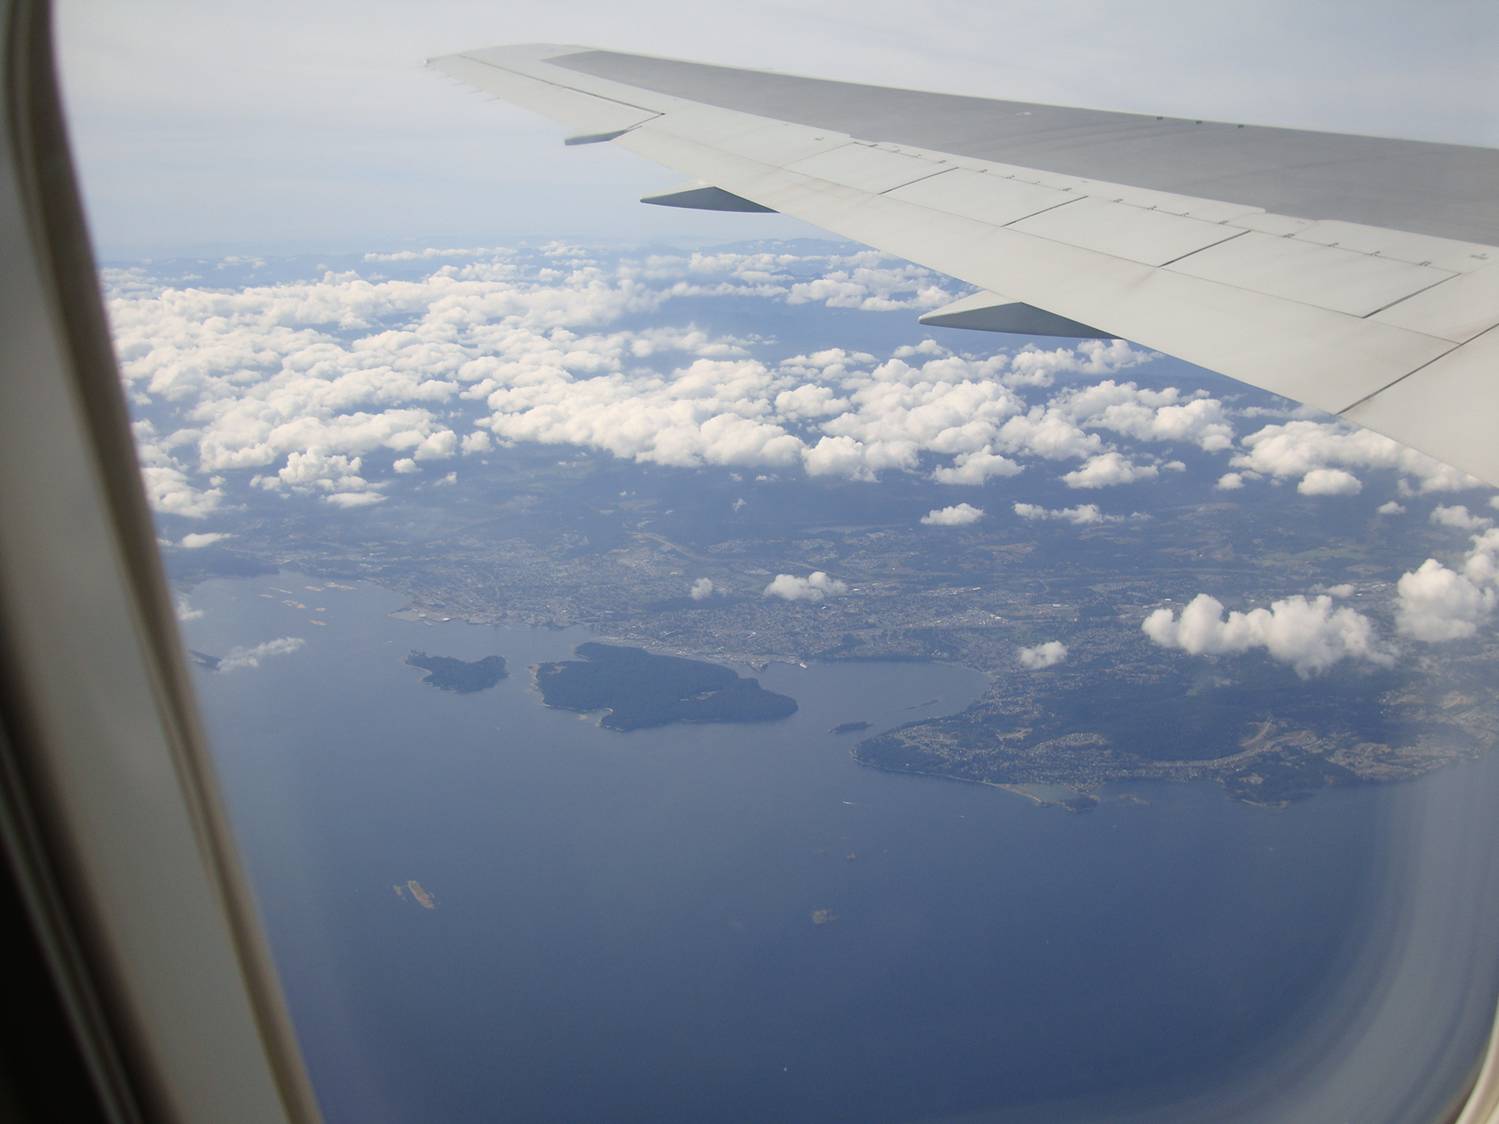 Nanaimo, B.C., Canada from the plane window.